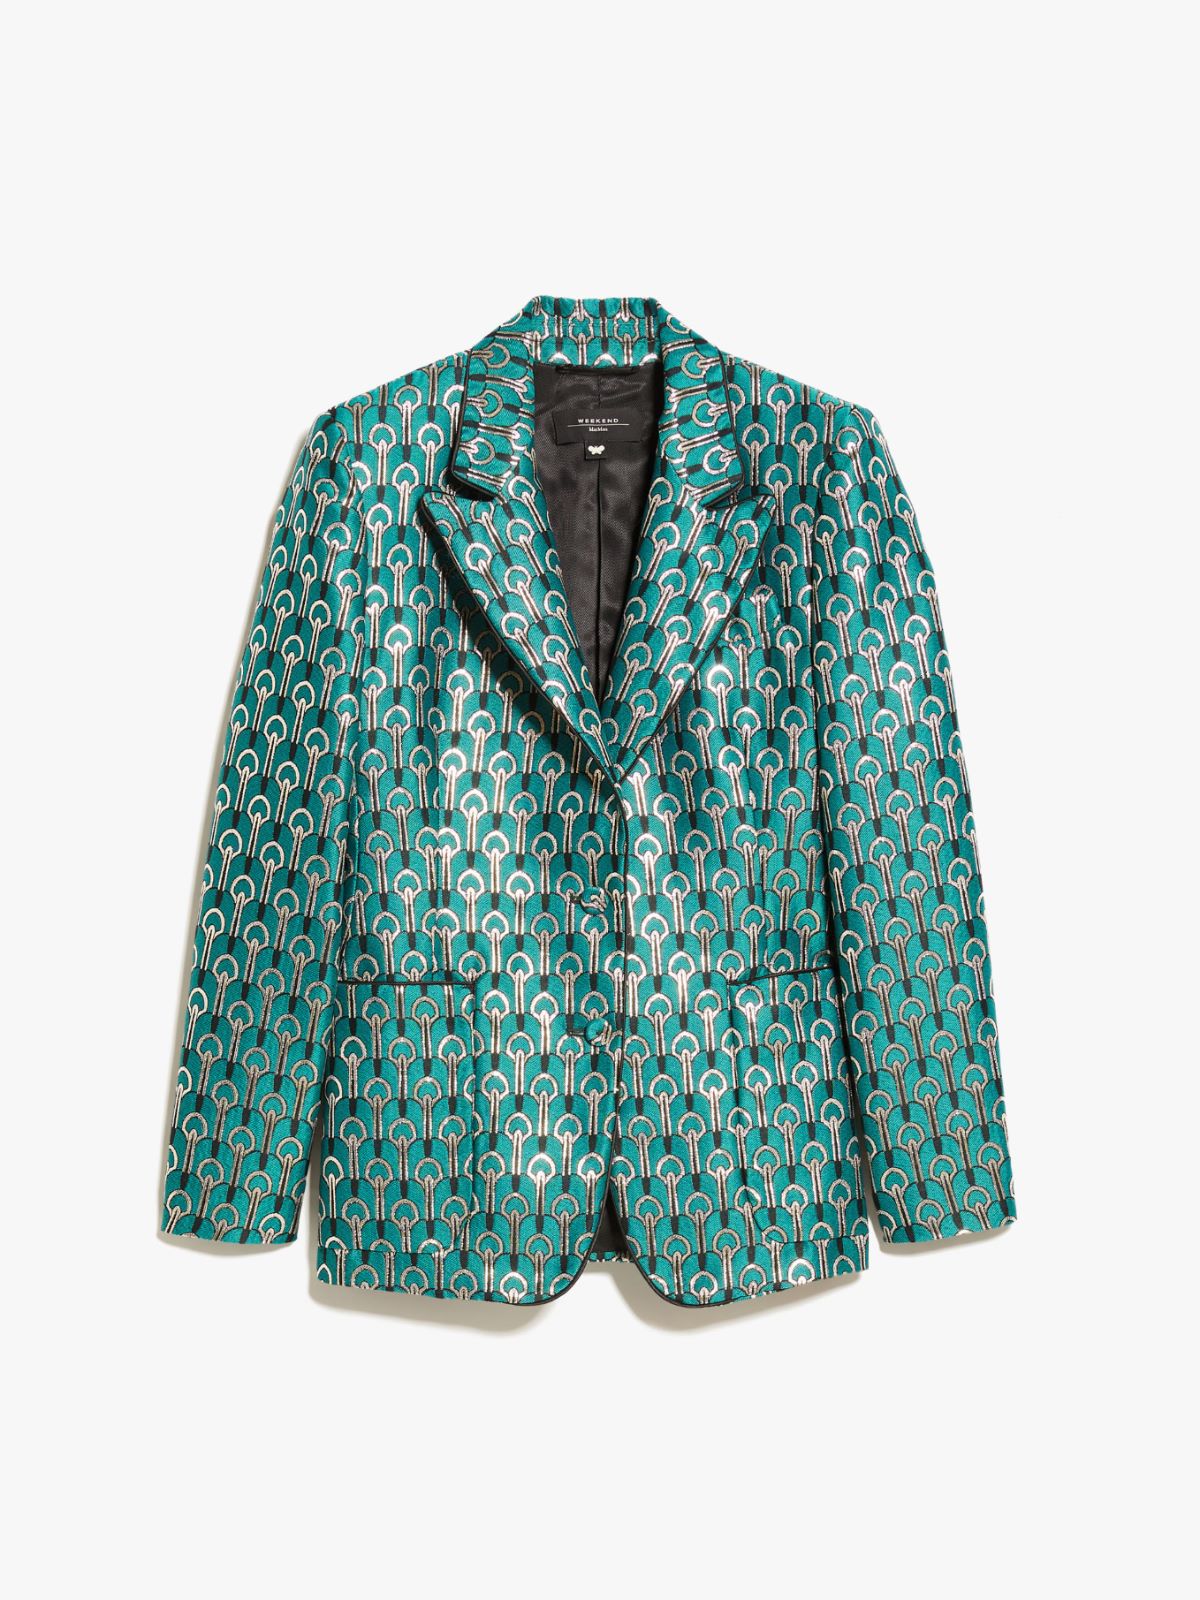 Jacquard fabric blazer - TURQUOISE - Weekend Max Mara - 7